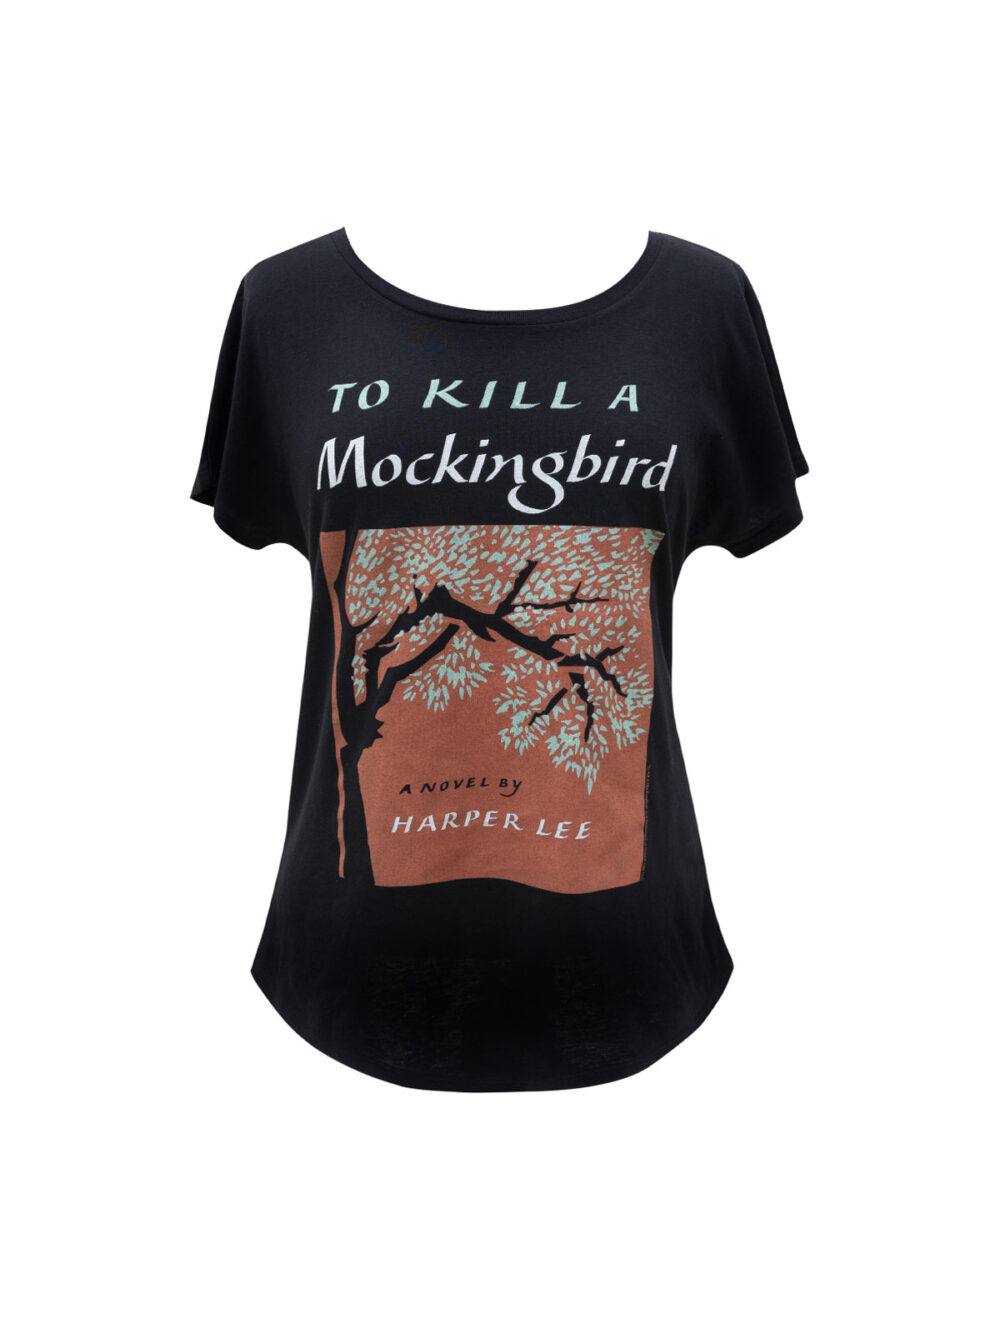 To Kill A Mockingbird T-Shirt (Women's)